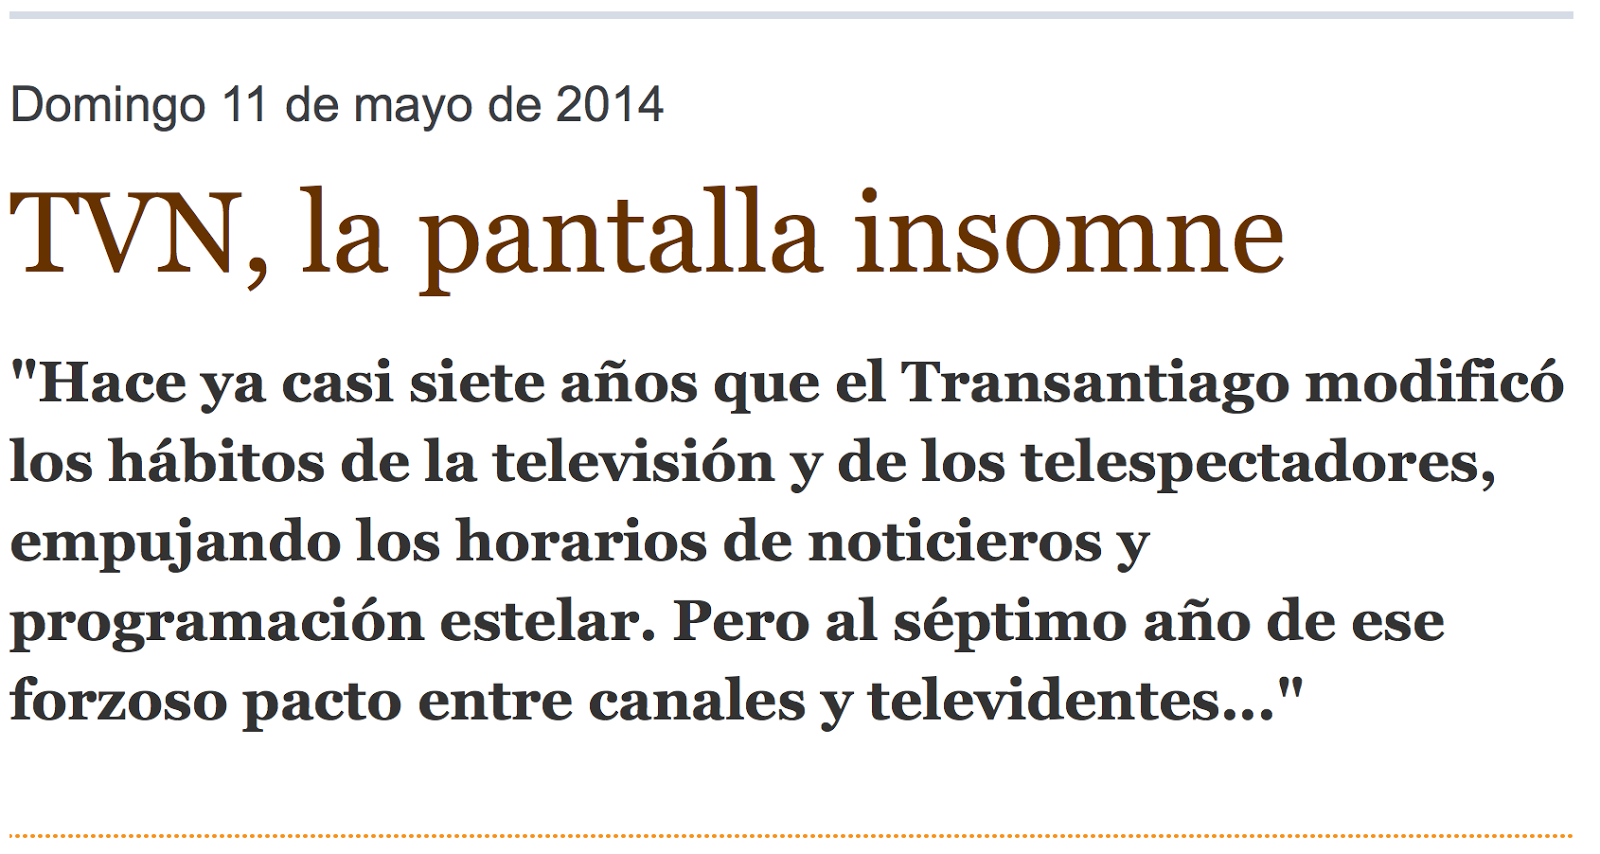 http://www.elmercurio.com/blogs/2014/05/11/21775/TVN-la-pantalla-insomne.aspx